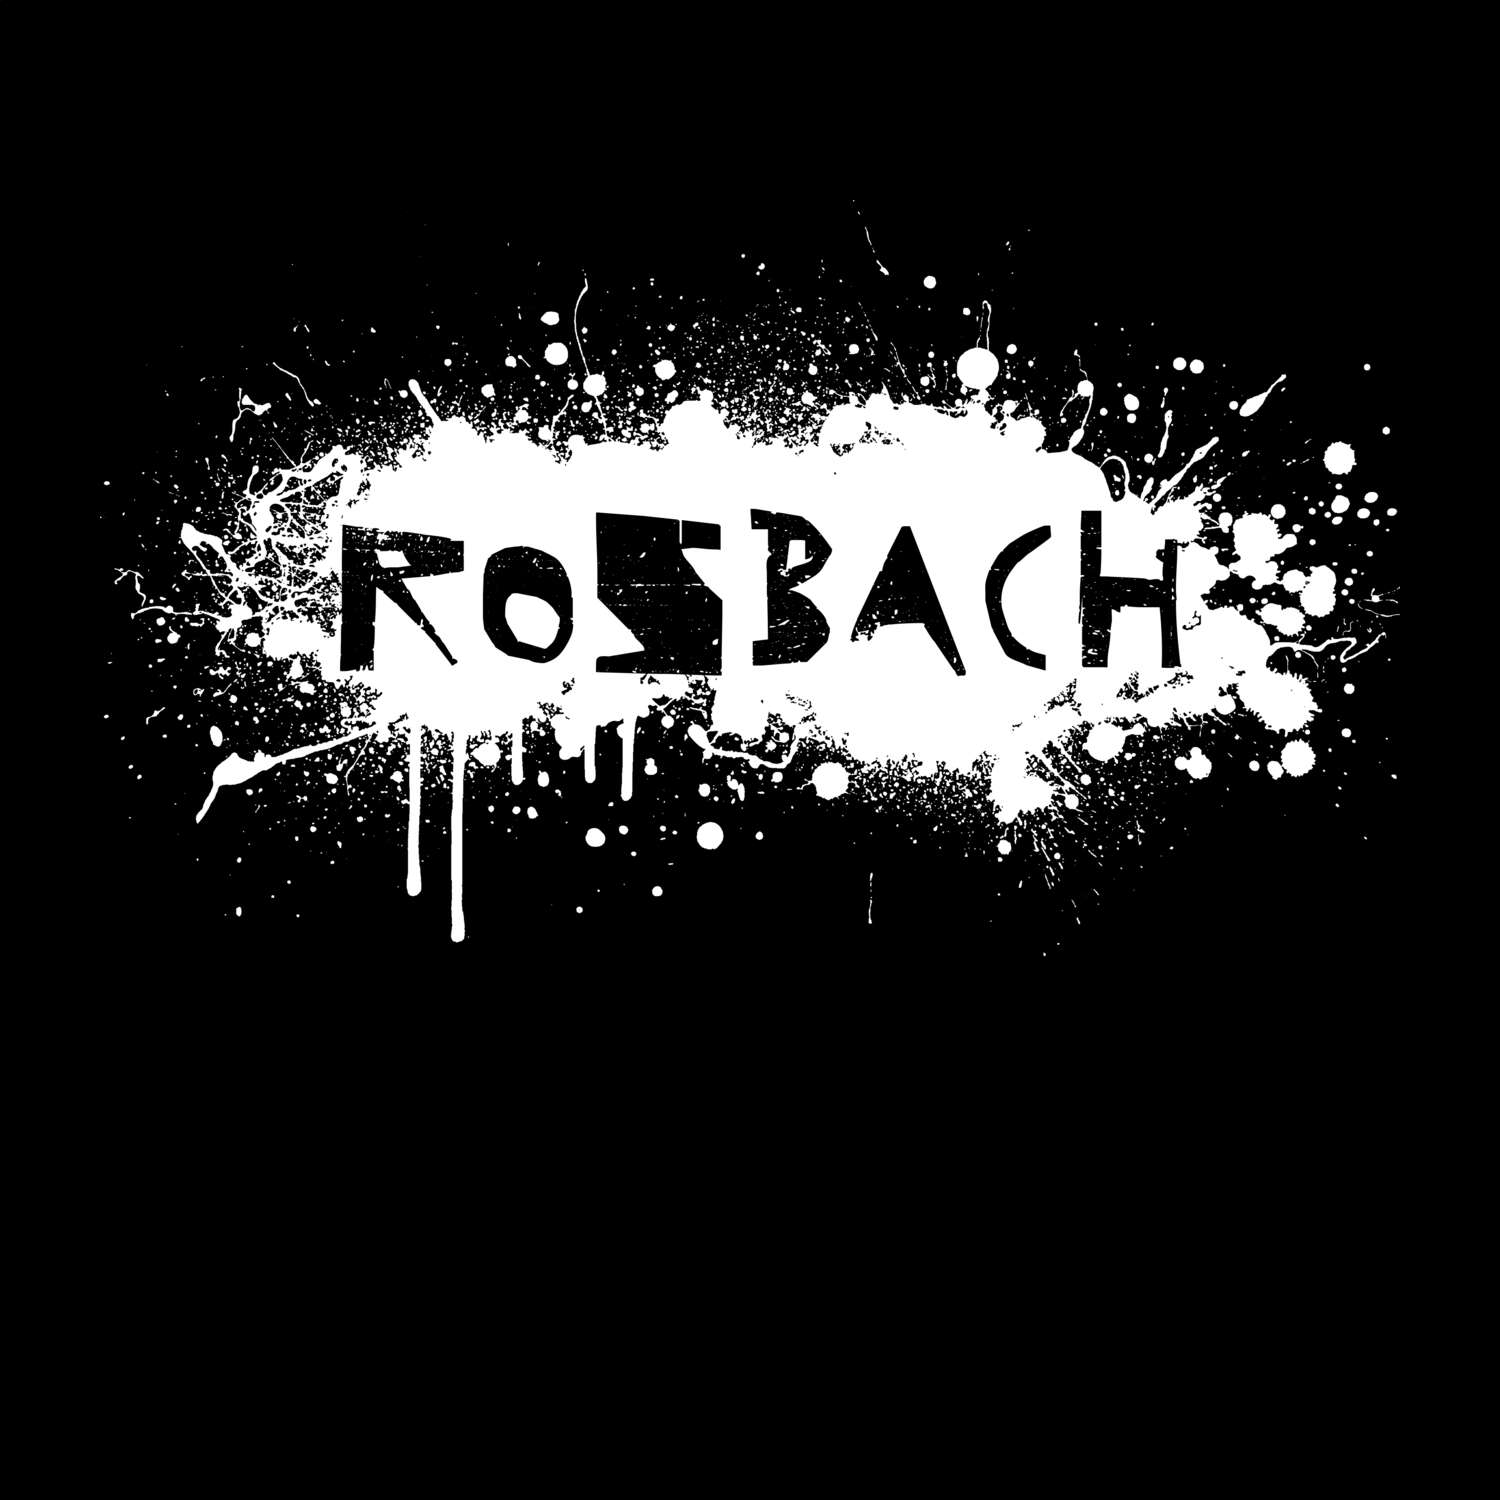 Rosbach T-Shirt »Paint Splash Punk«